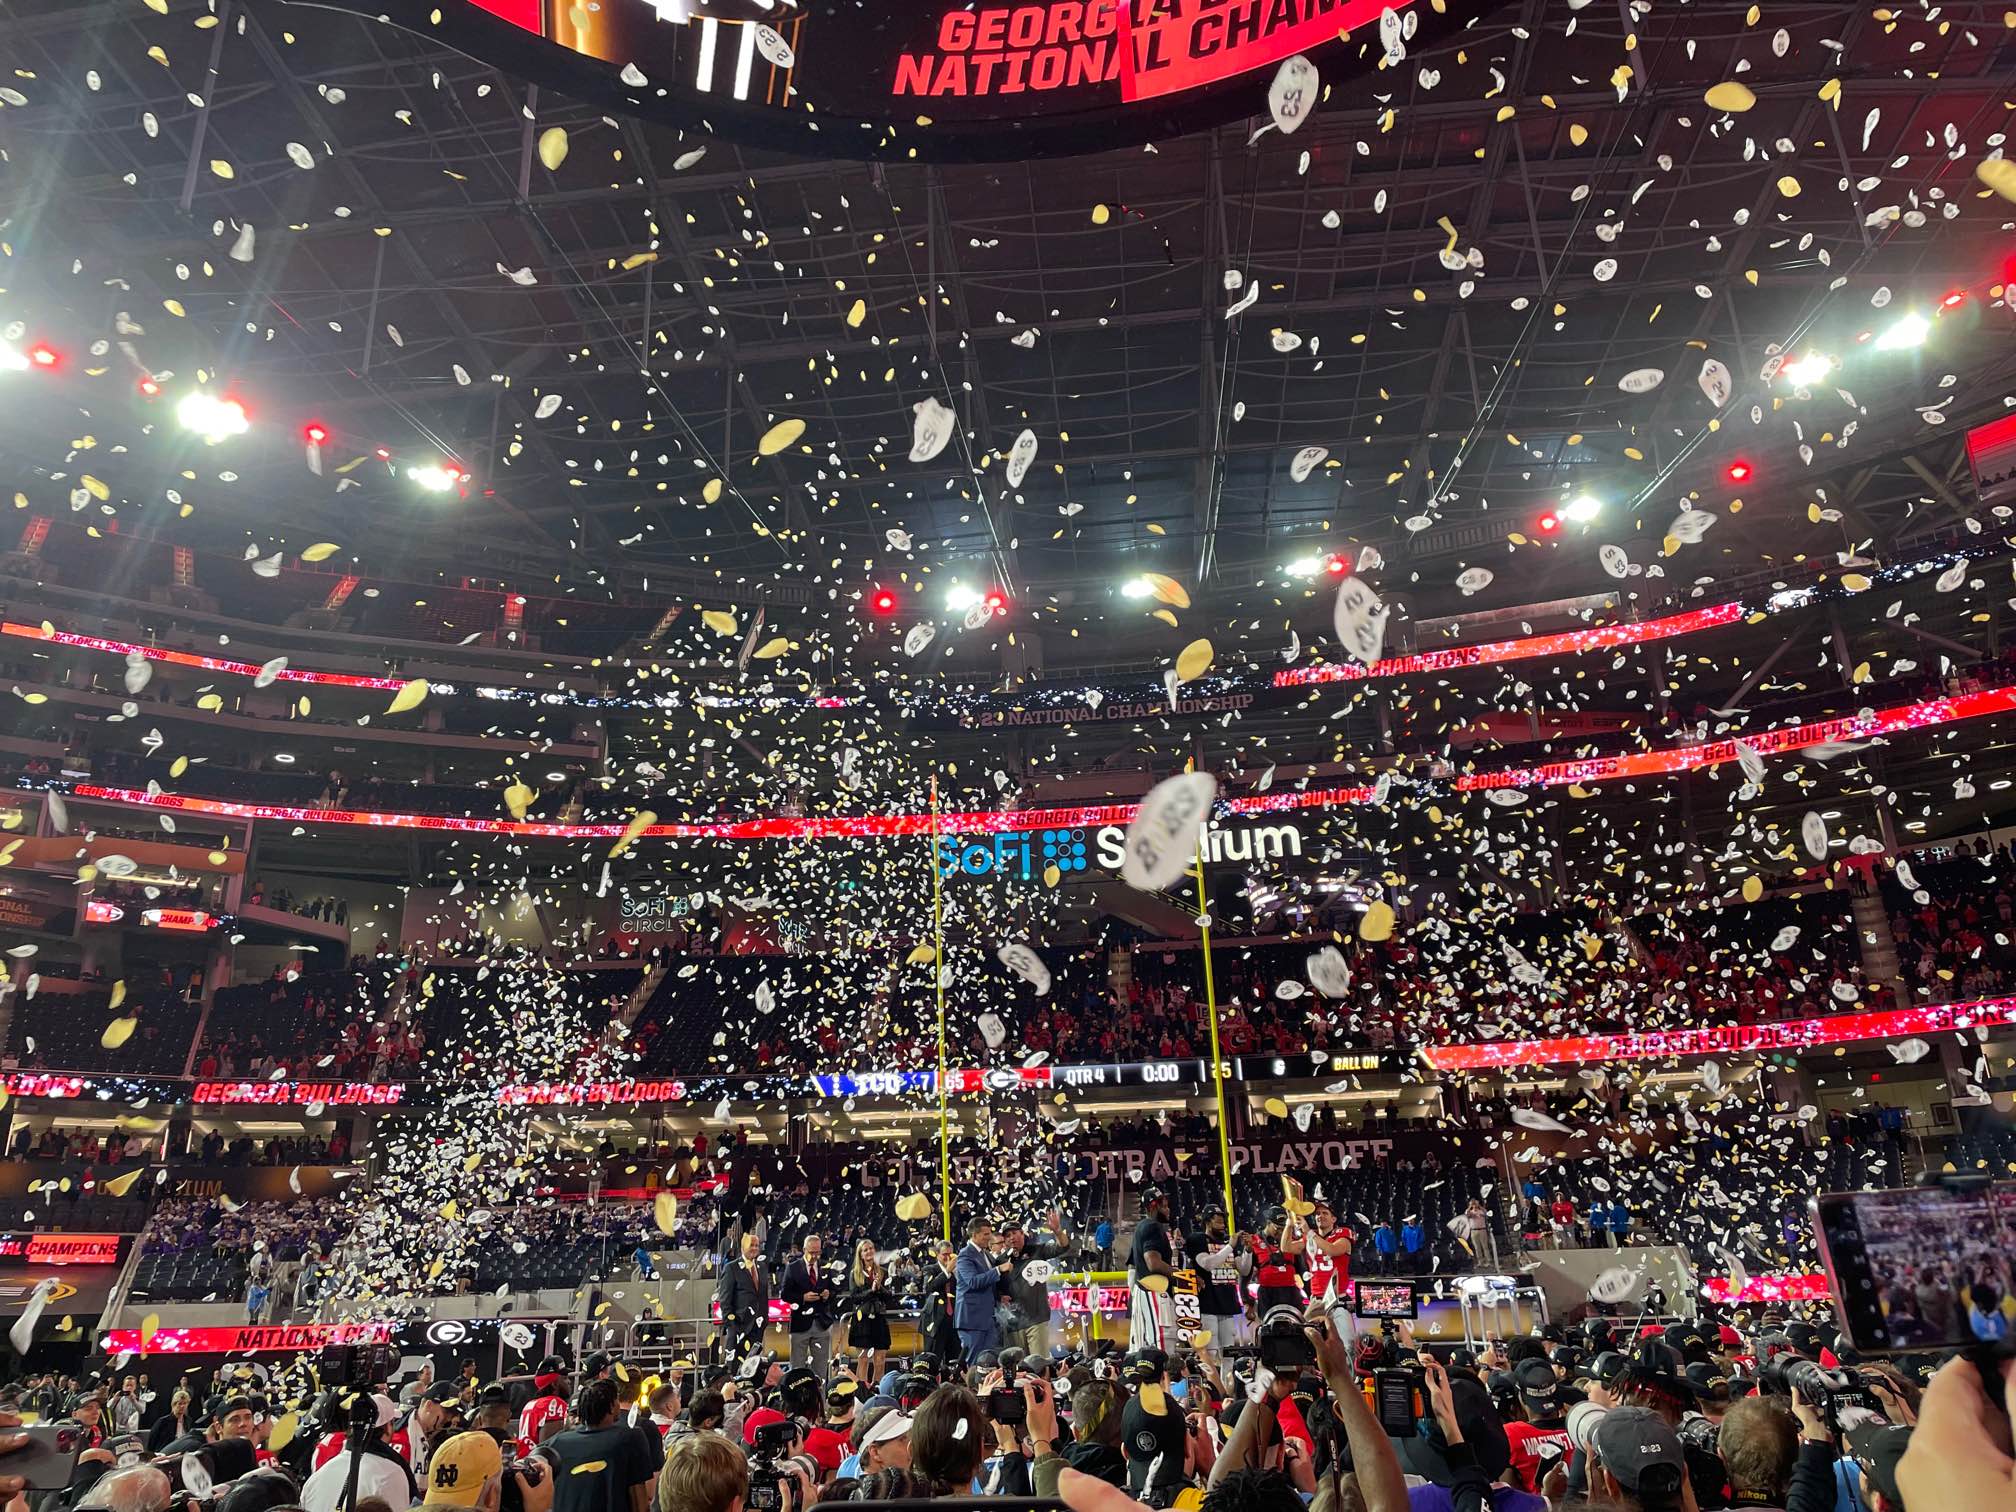 Atlanta Braves celebrate Georgia Football National Championship win